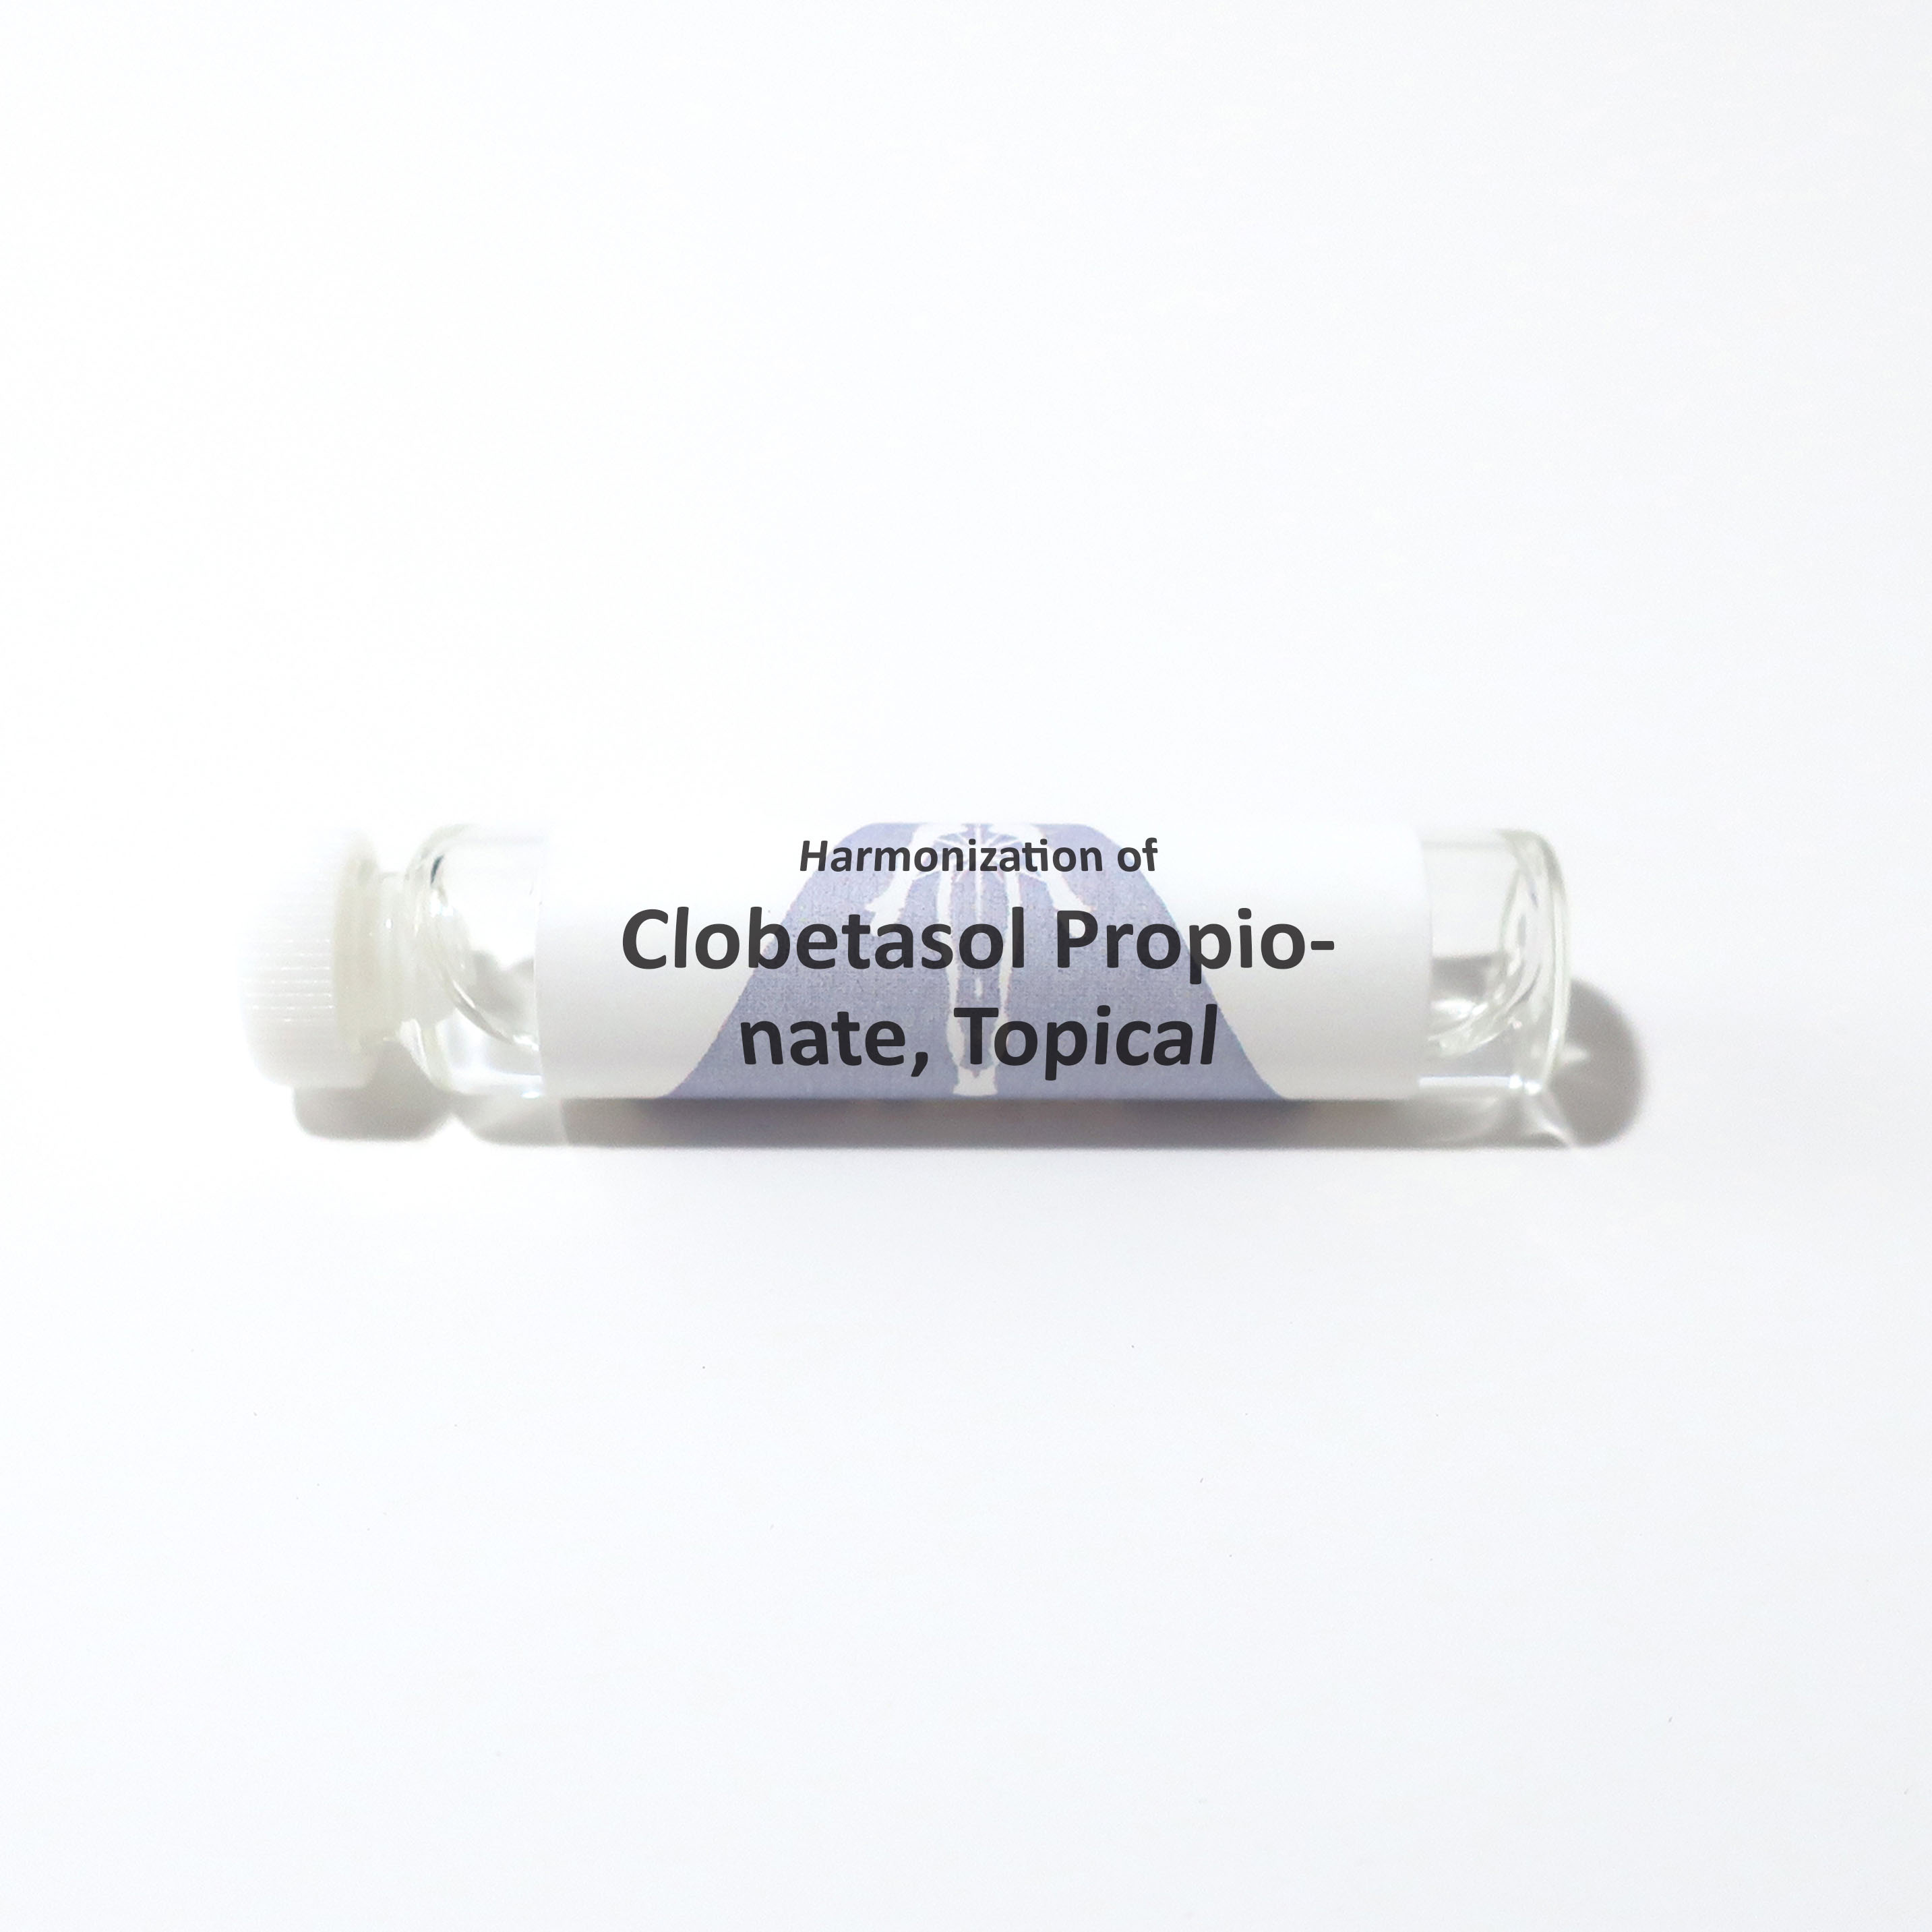 Clobetasol Propionate, Topical (Clobex/Dermovate)